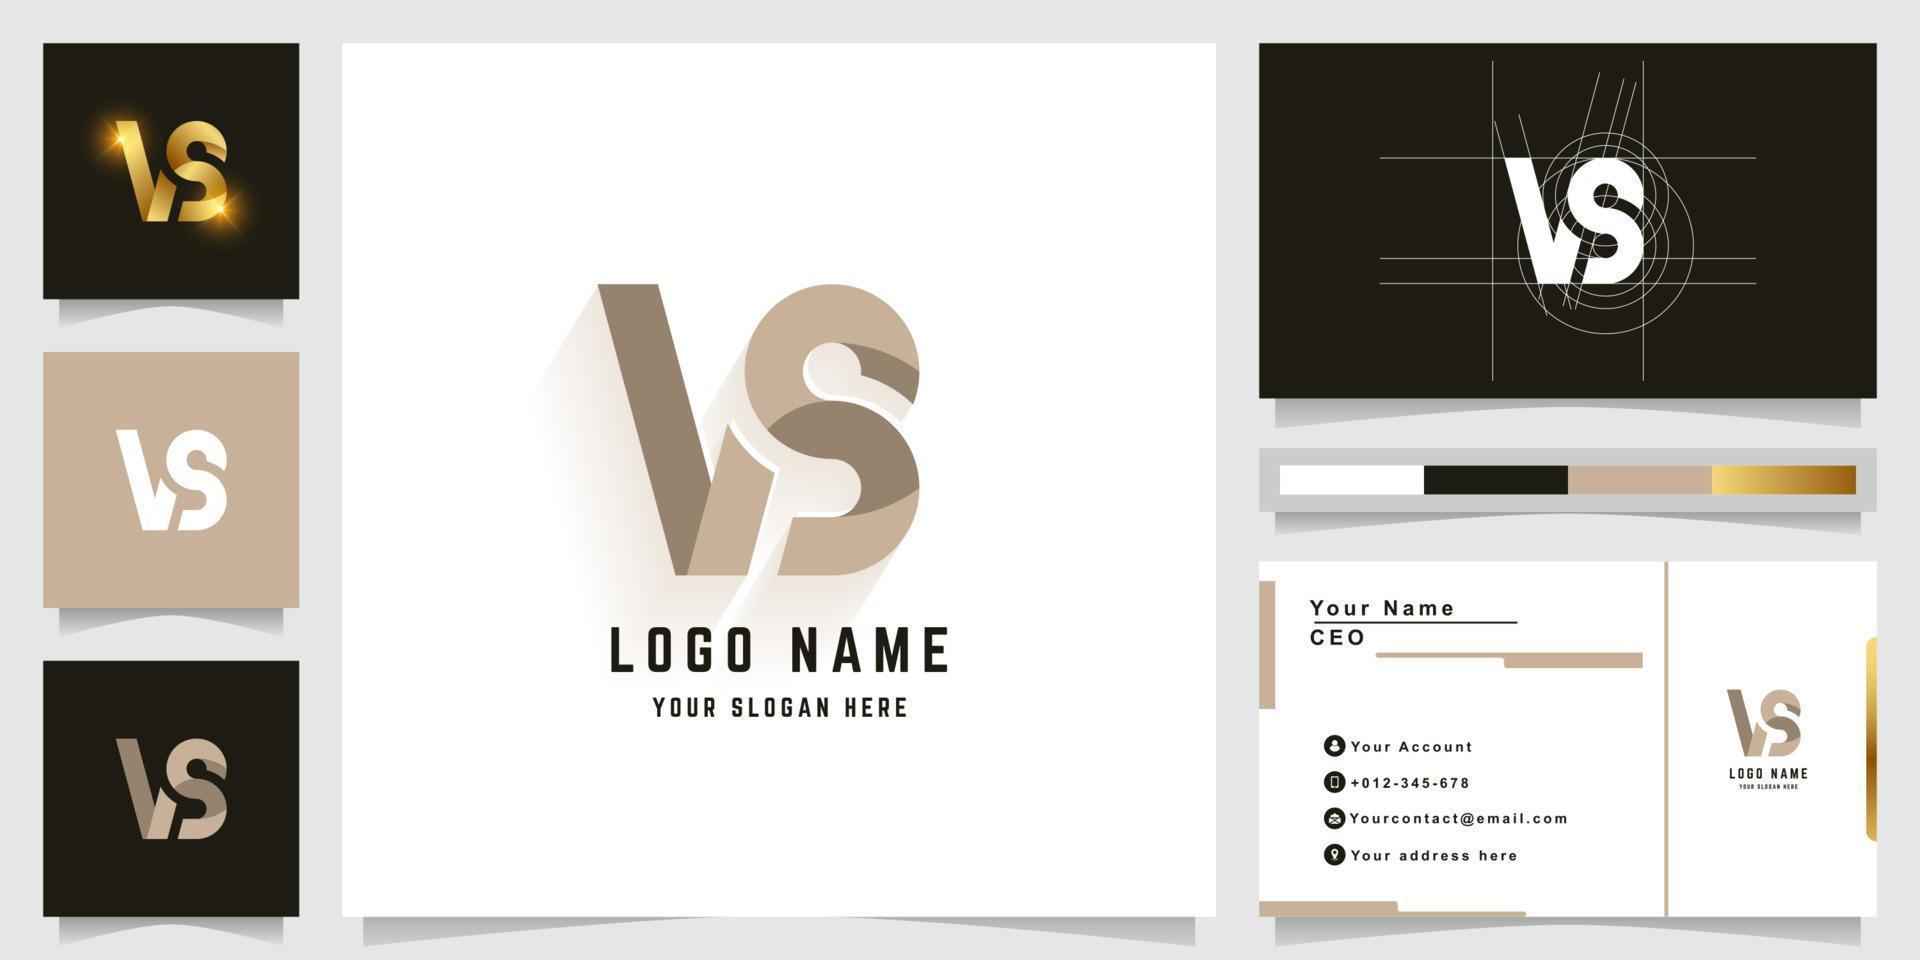 Letter VS or LS monogram logo with business card design vector